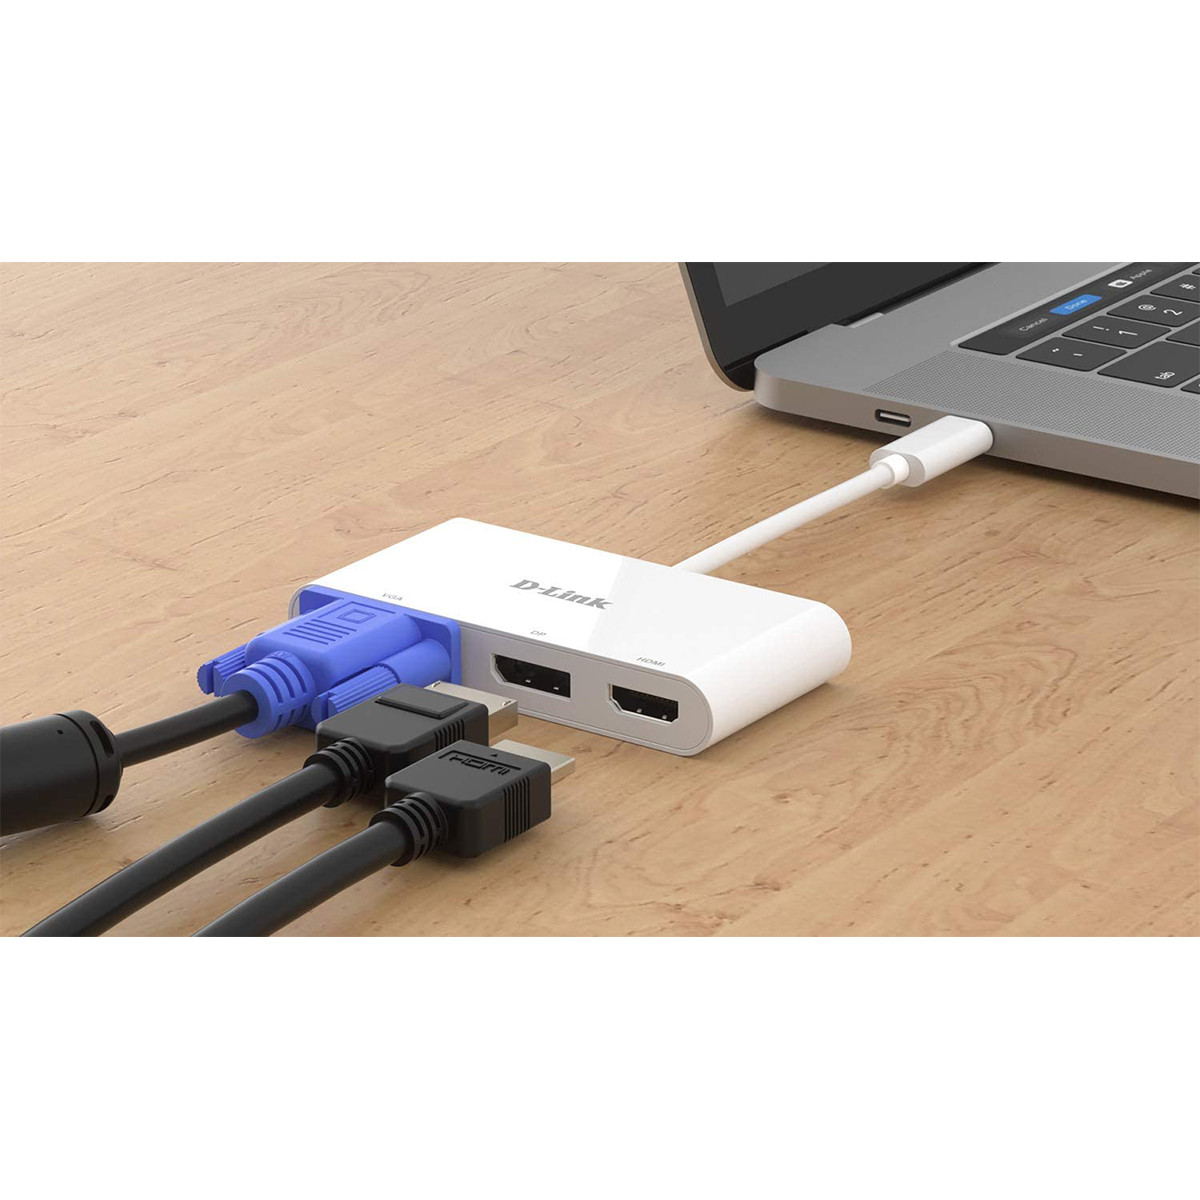 3-in-1 USB-C to HDMI/VGA/DisplayPort Adapter